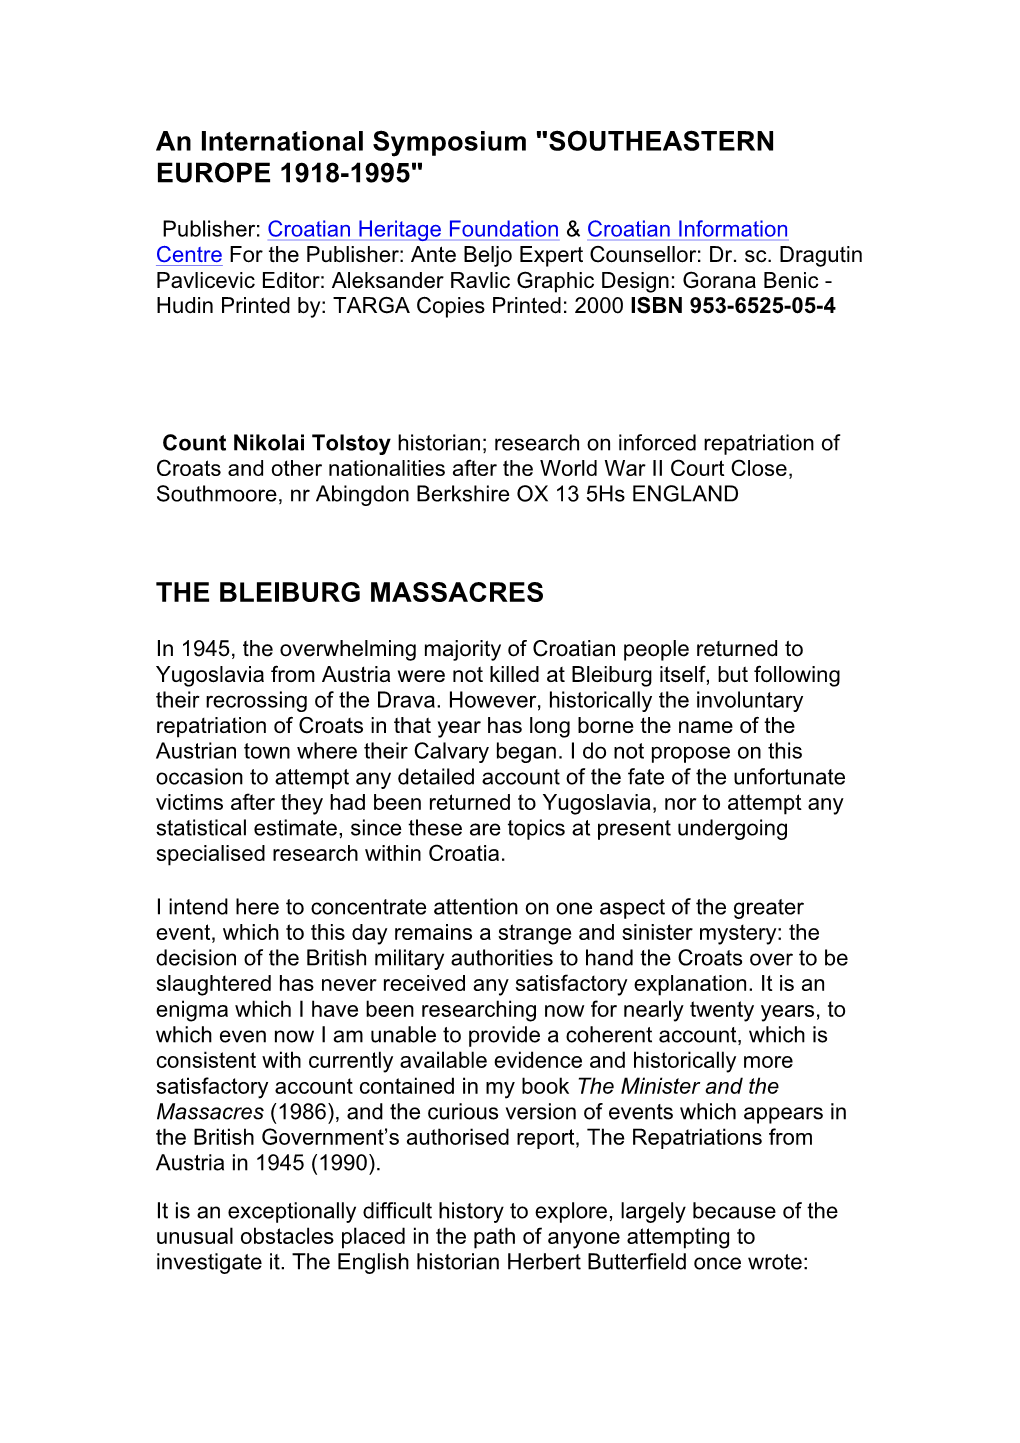 The Bleiburg Massacres